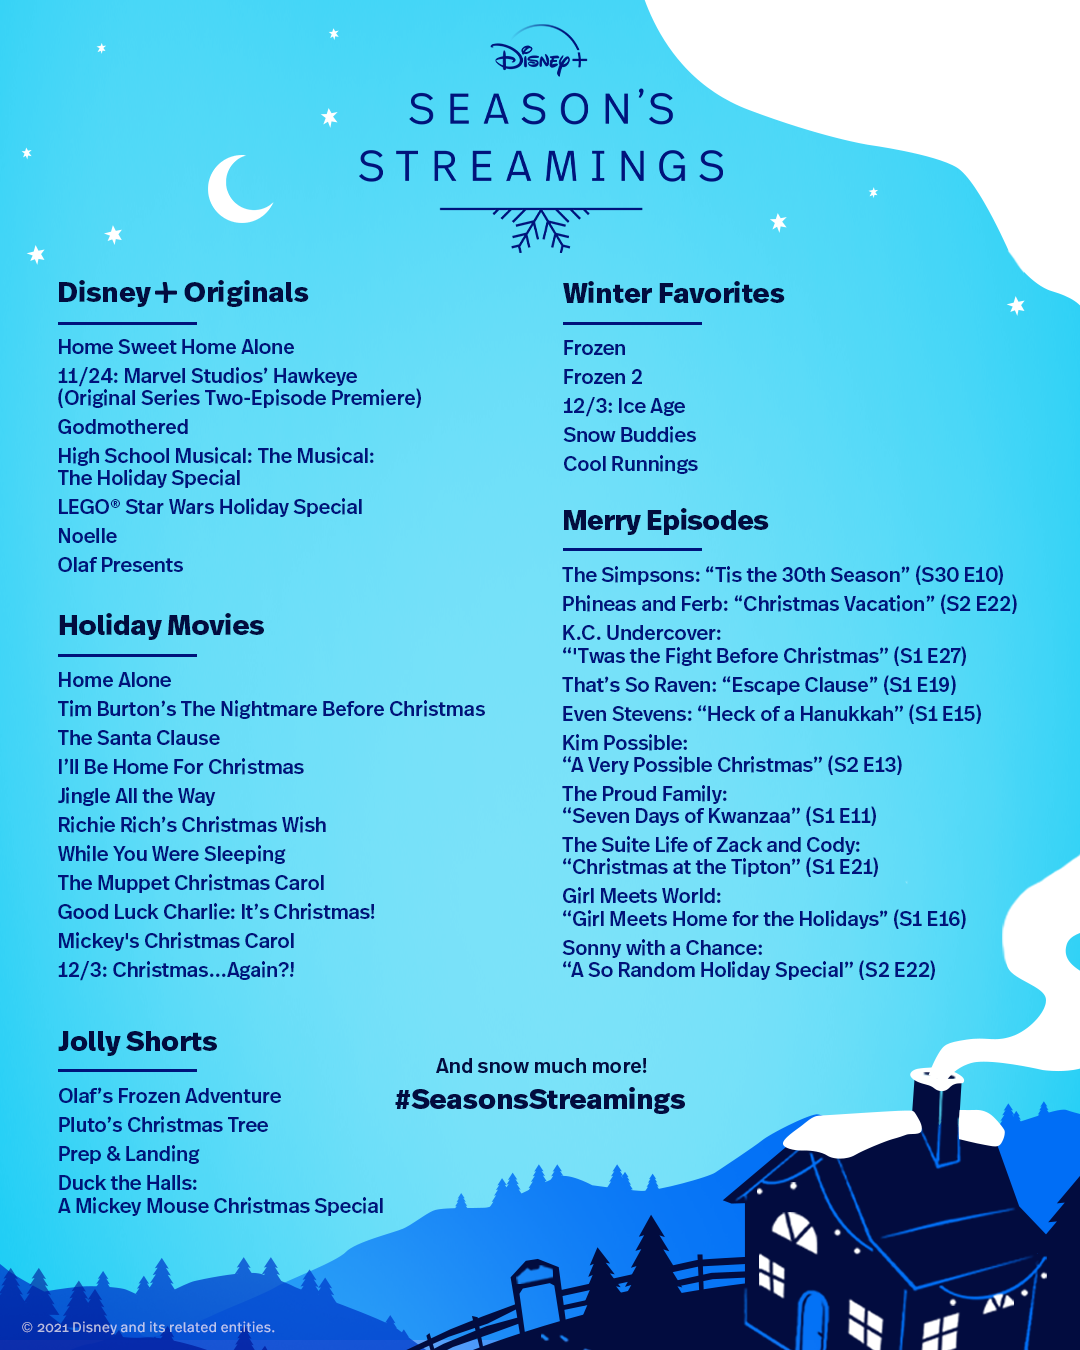 Season’s Streaming: Disney+ 2021 Holiday Schedule